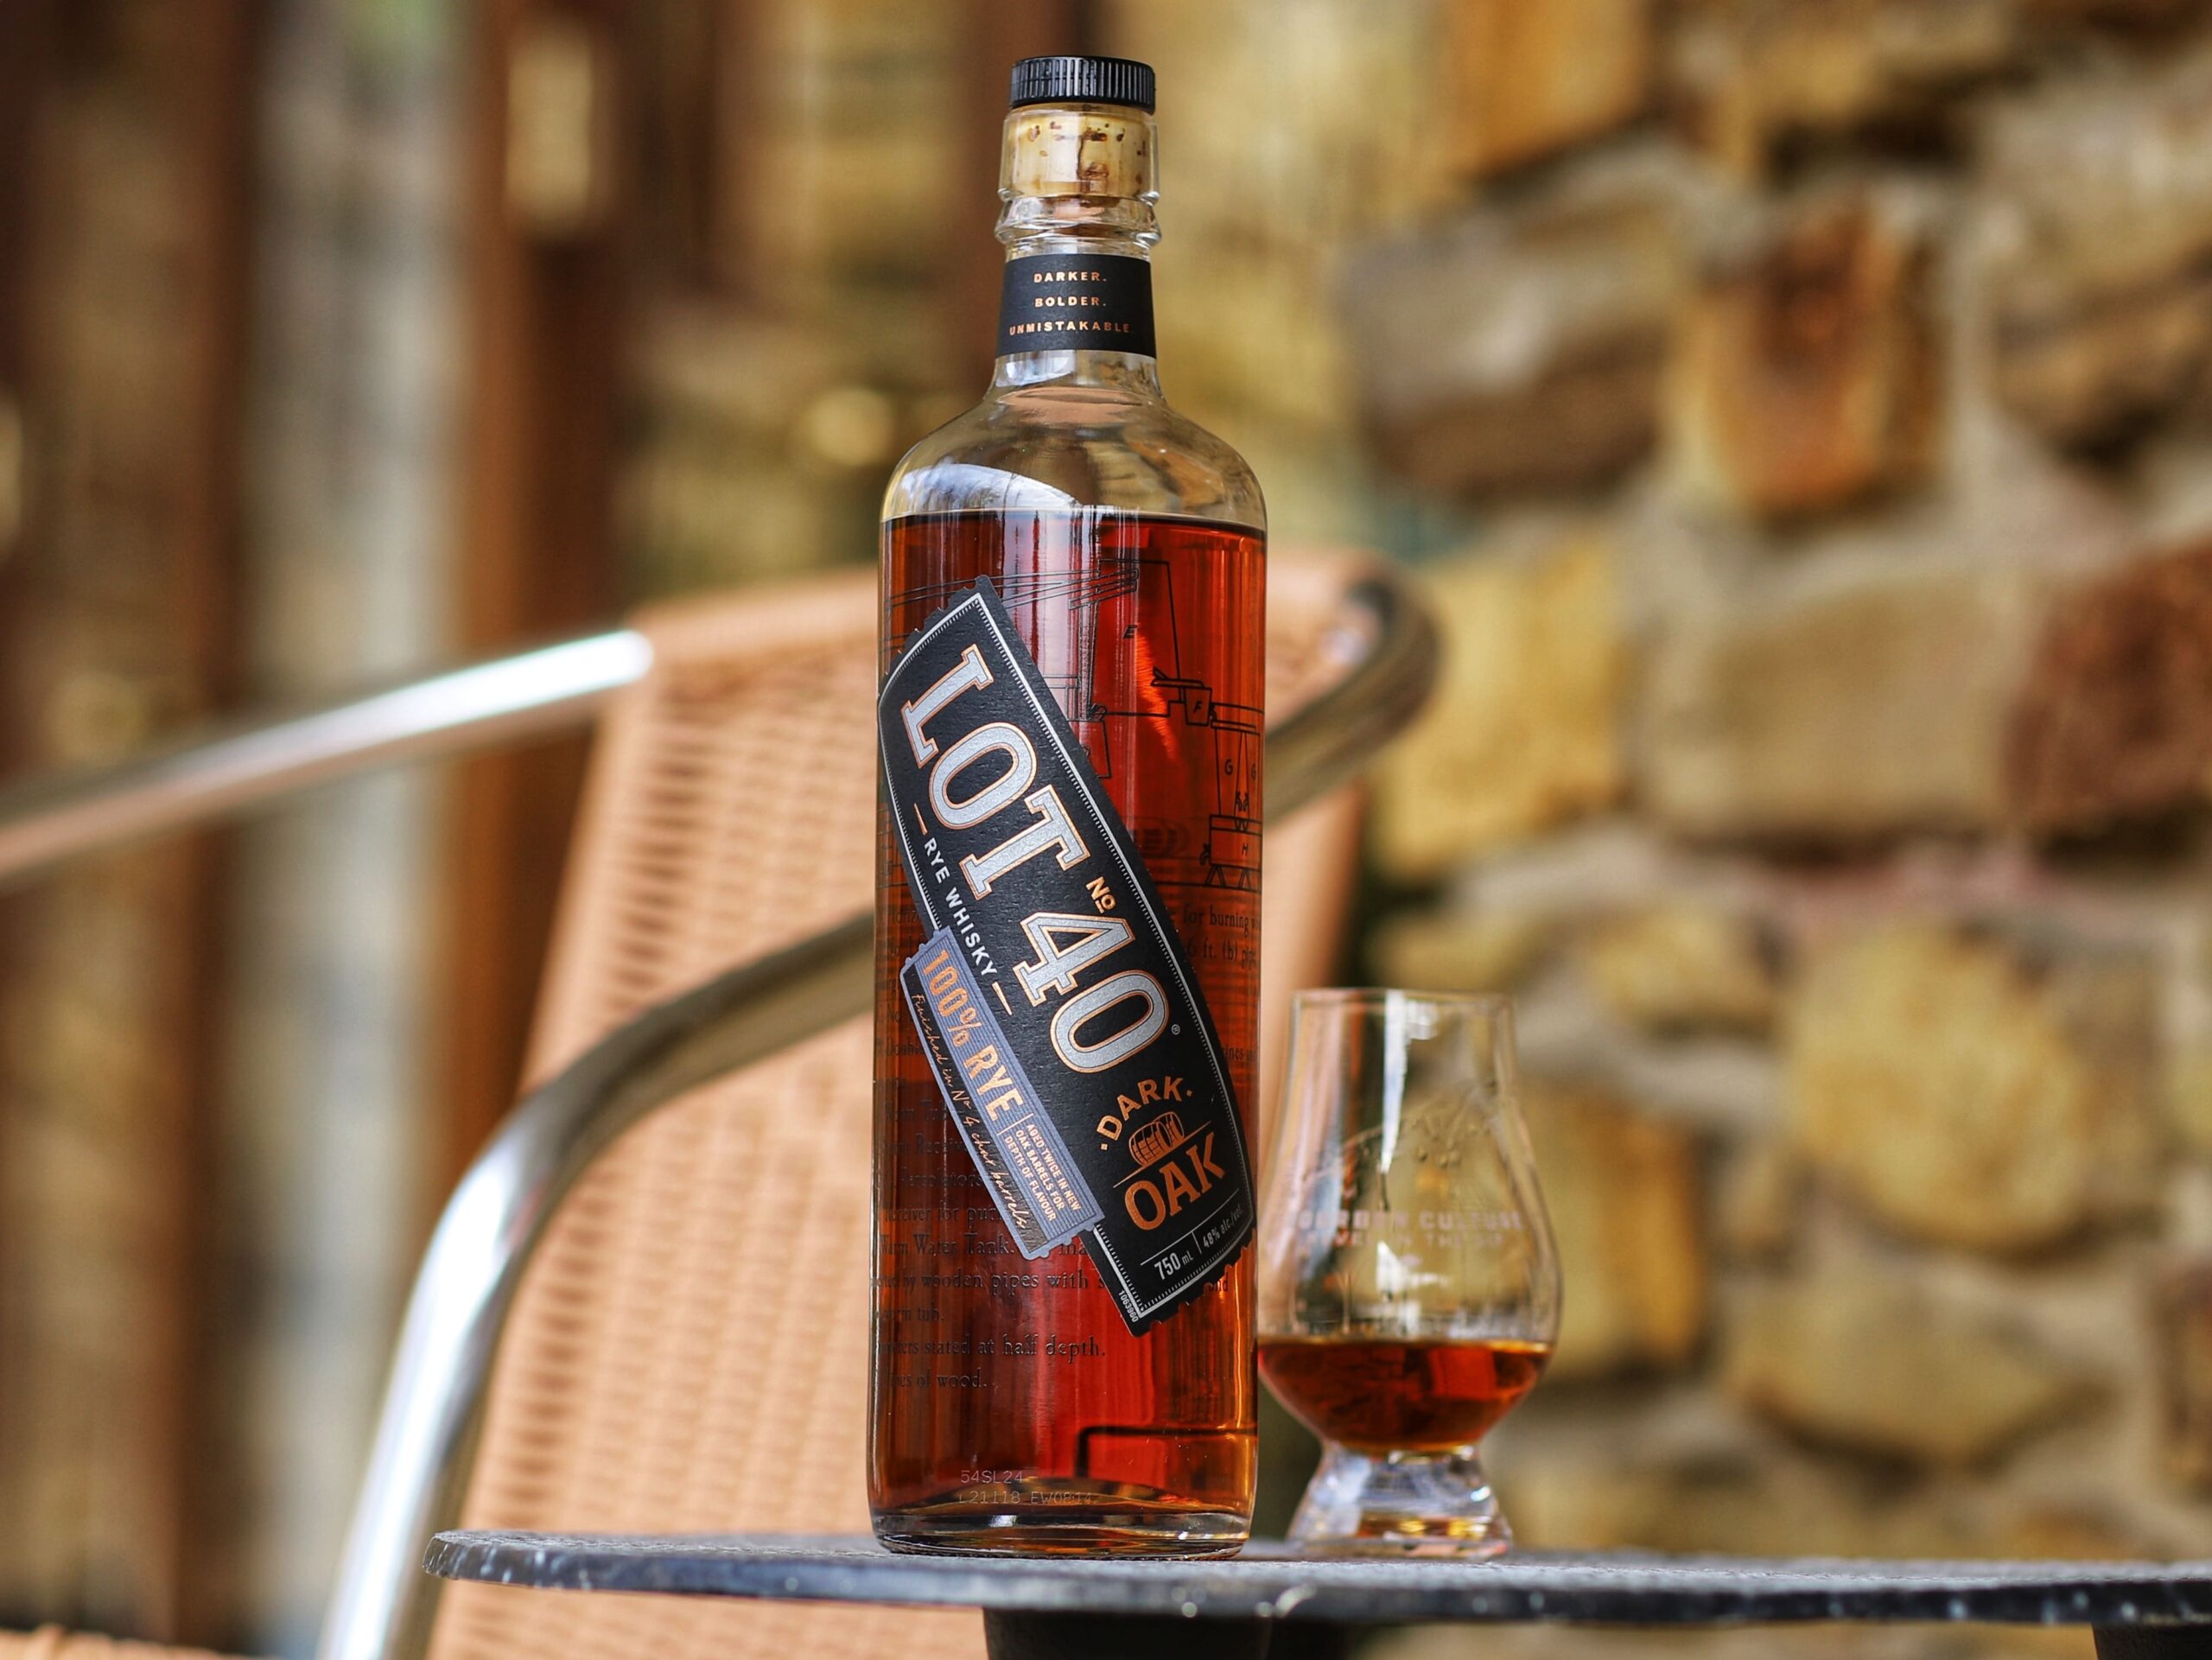 Lot No. 40 “Dark Oak” Rye Whisky Review